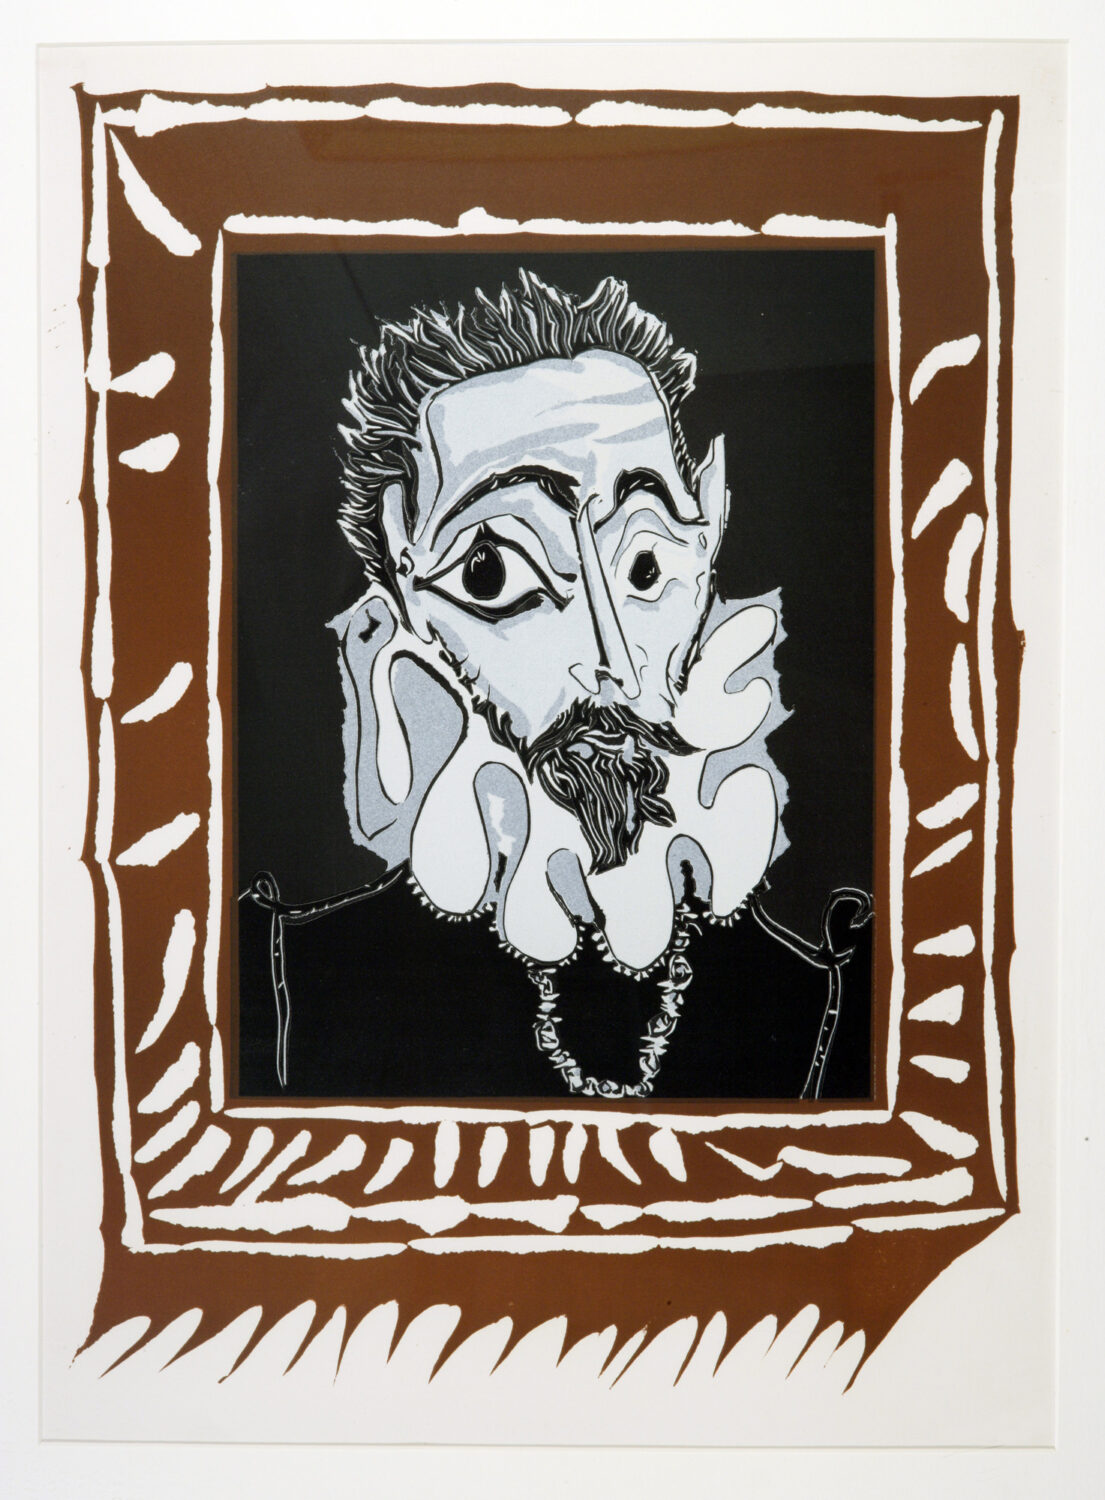 thumbnail of Lino-Cut by Pablo Picasso titled L'Homme a la Fraise.